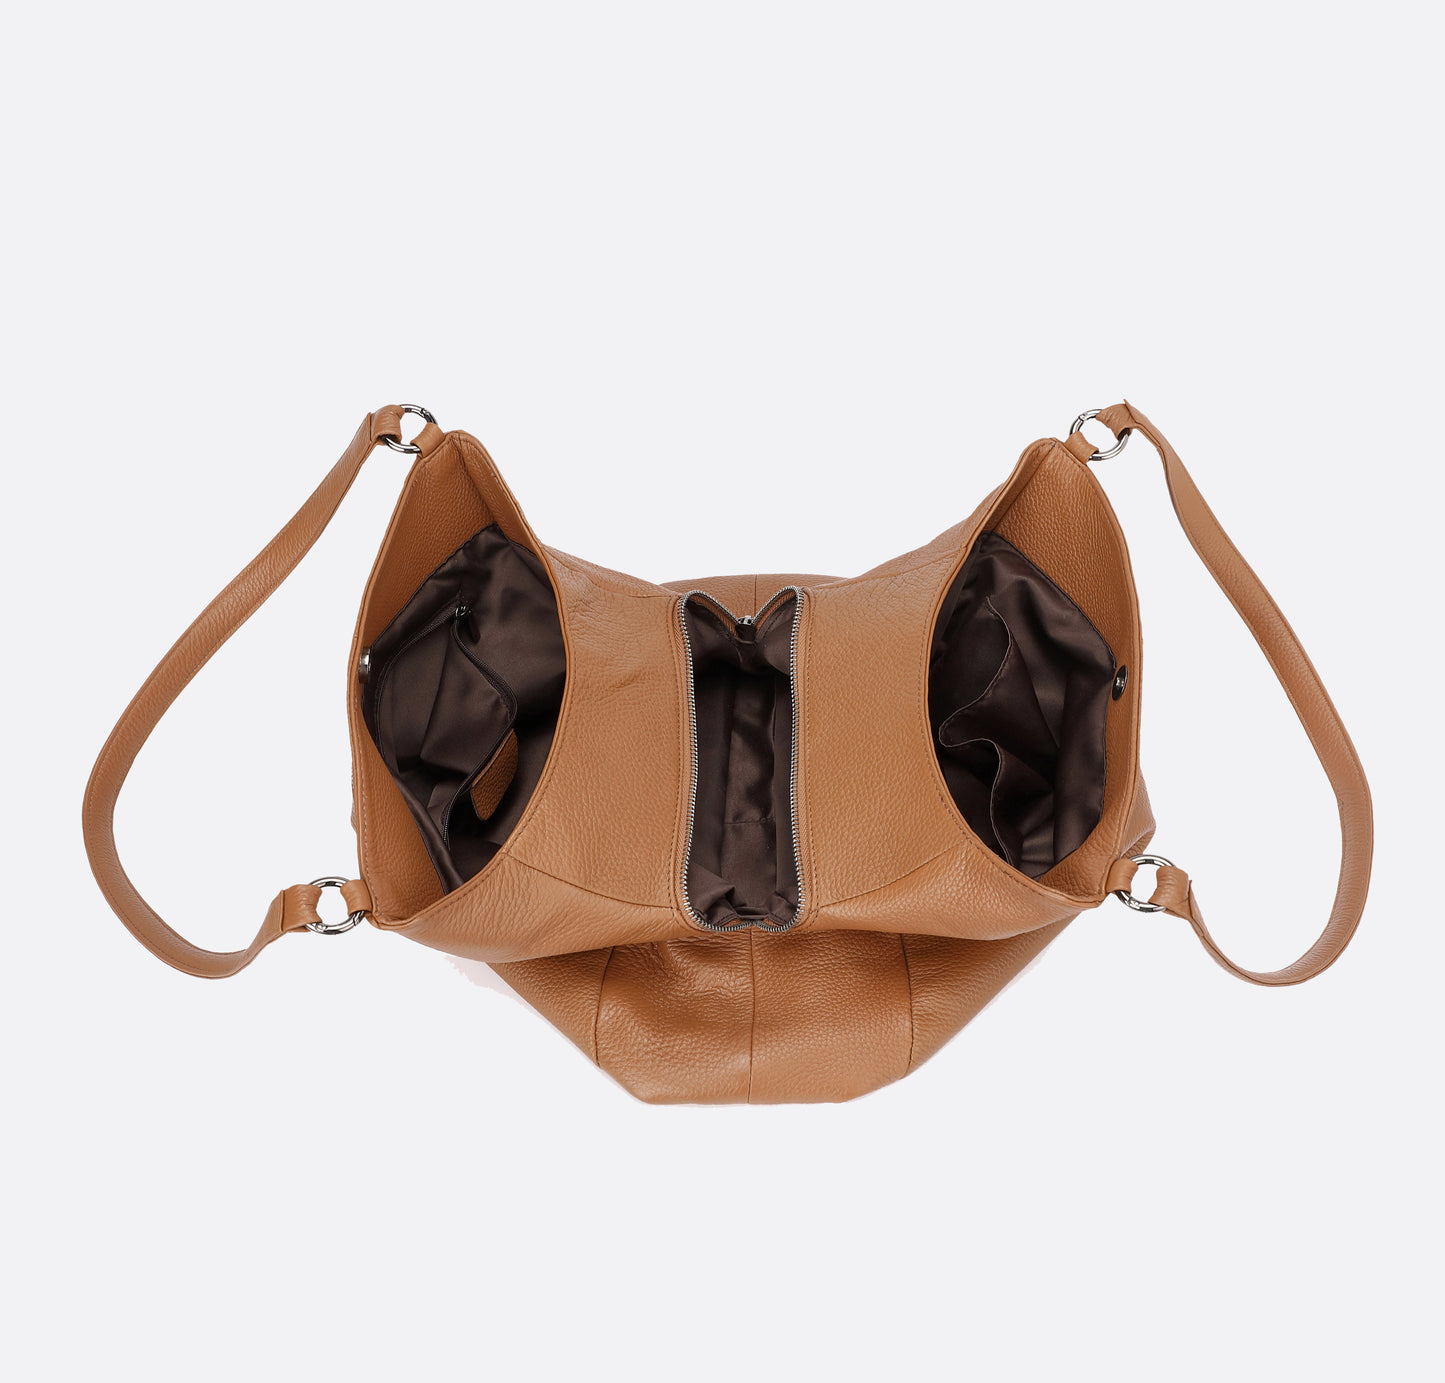 Women's genuine cowhide leather handbag Klos V3 design